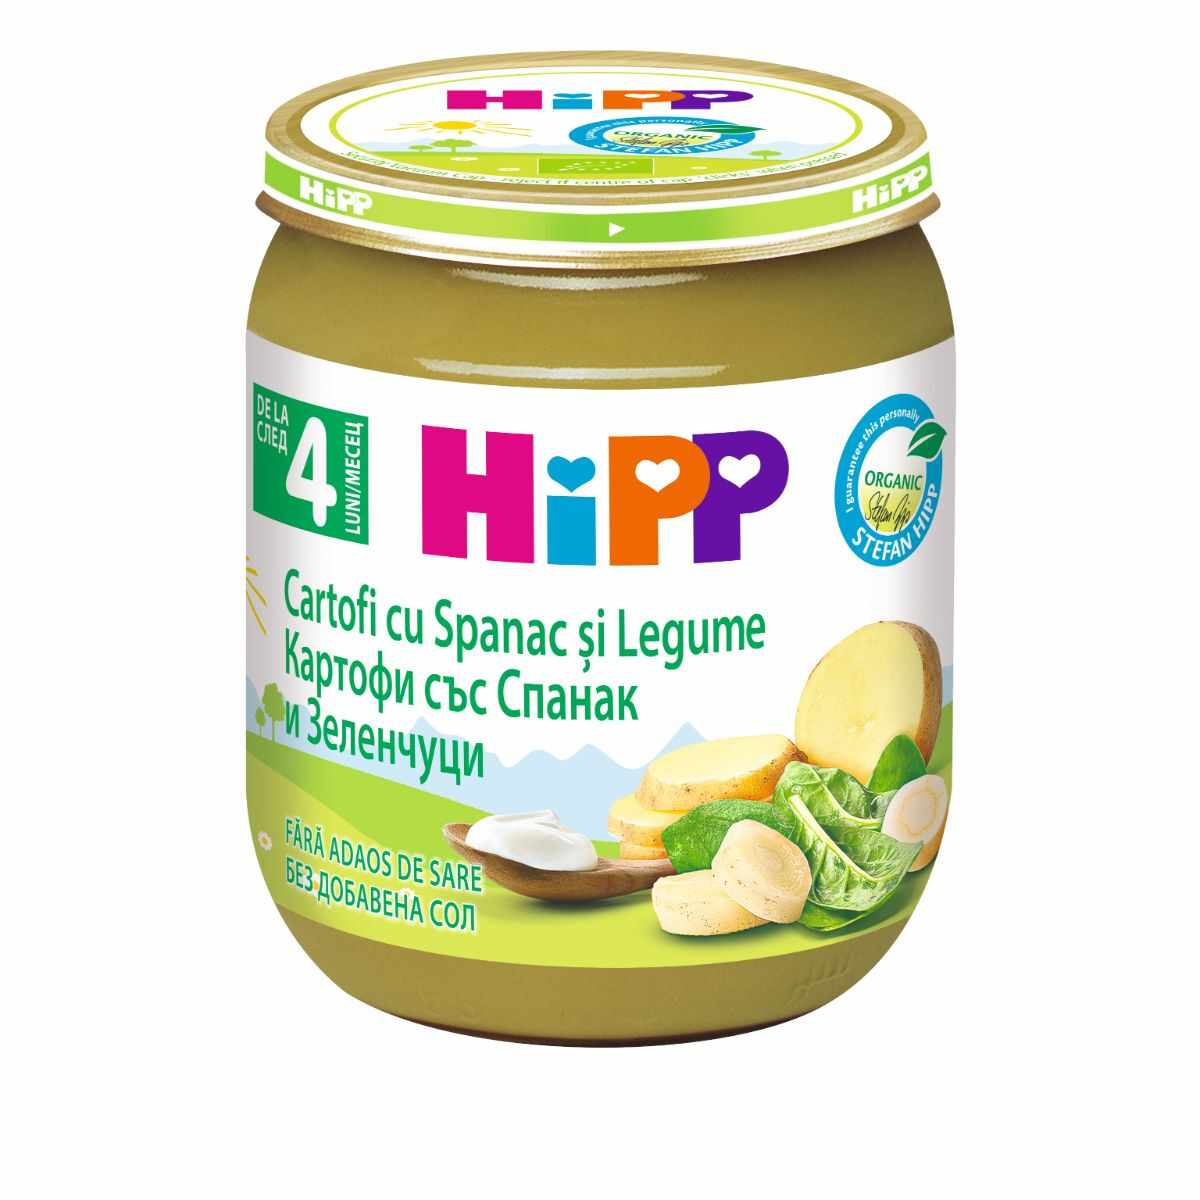 Piure crema din spanac si legume, Hipp, 125 g